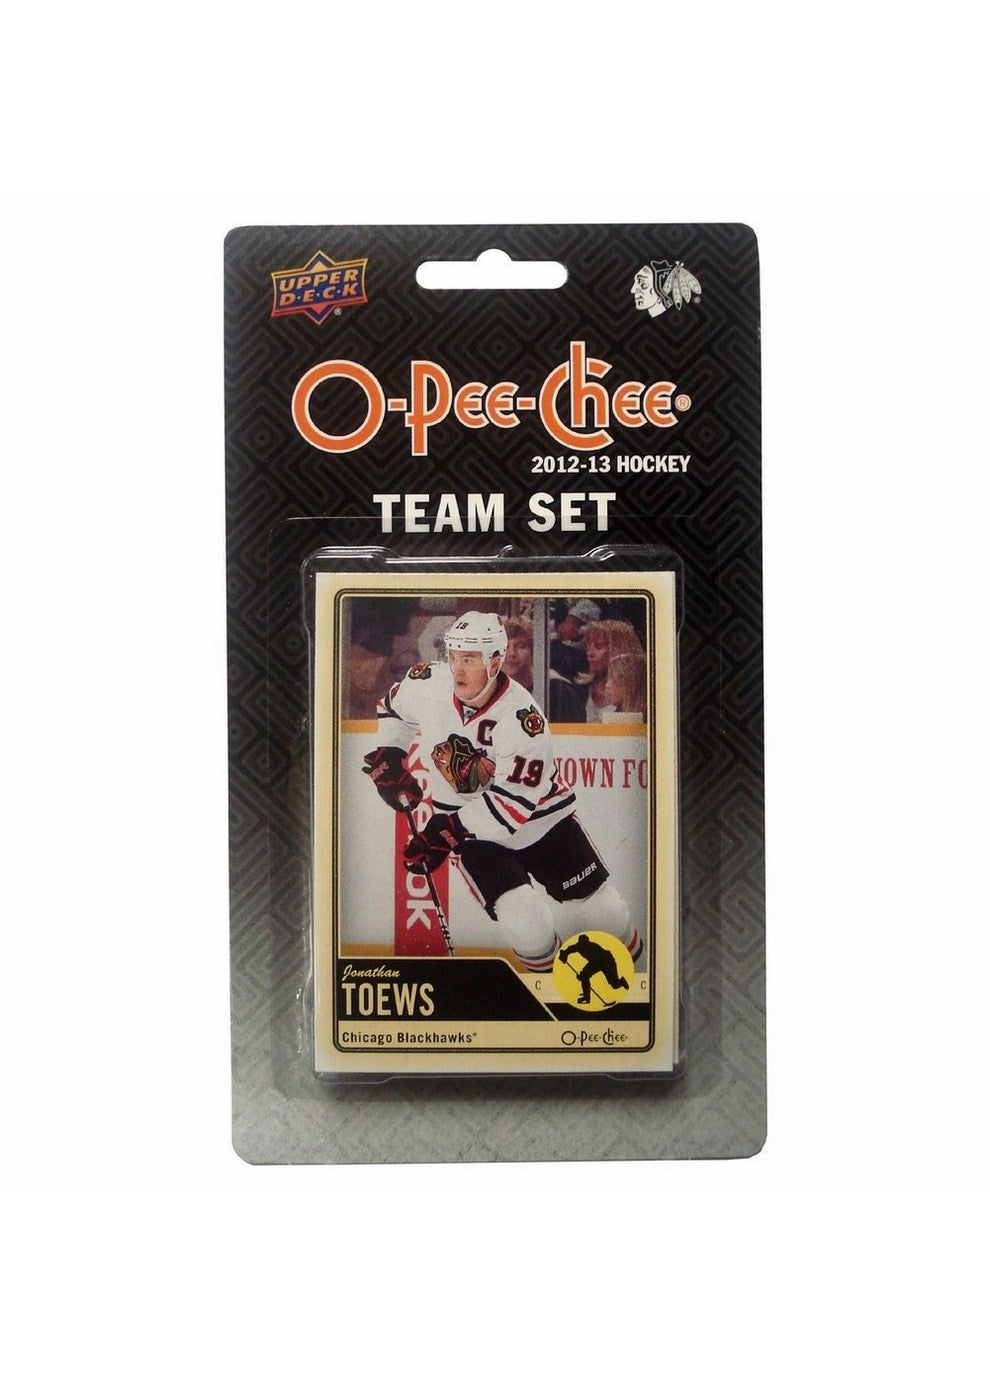 2012/13 Upper Deck O-pee-chee Team Card Set (17 Cards) - Chicago Blackhawks